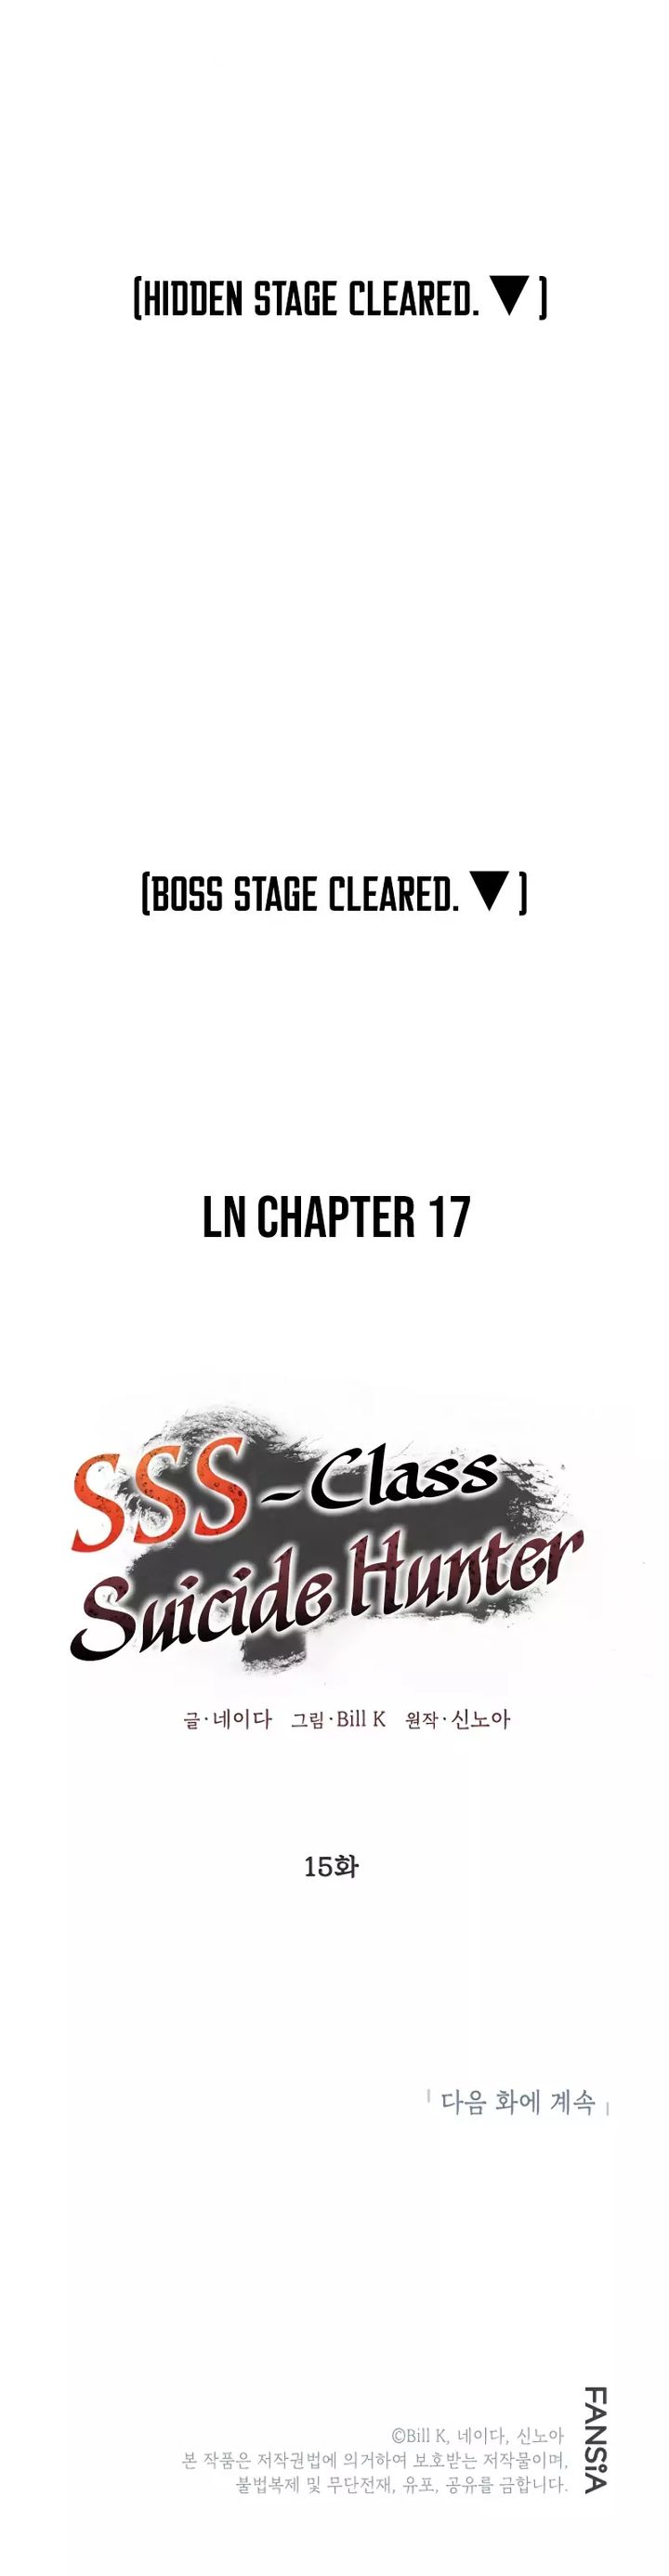 sss_class_suicide_hunter_15_18